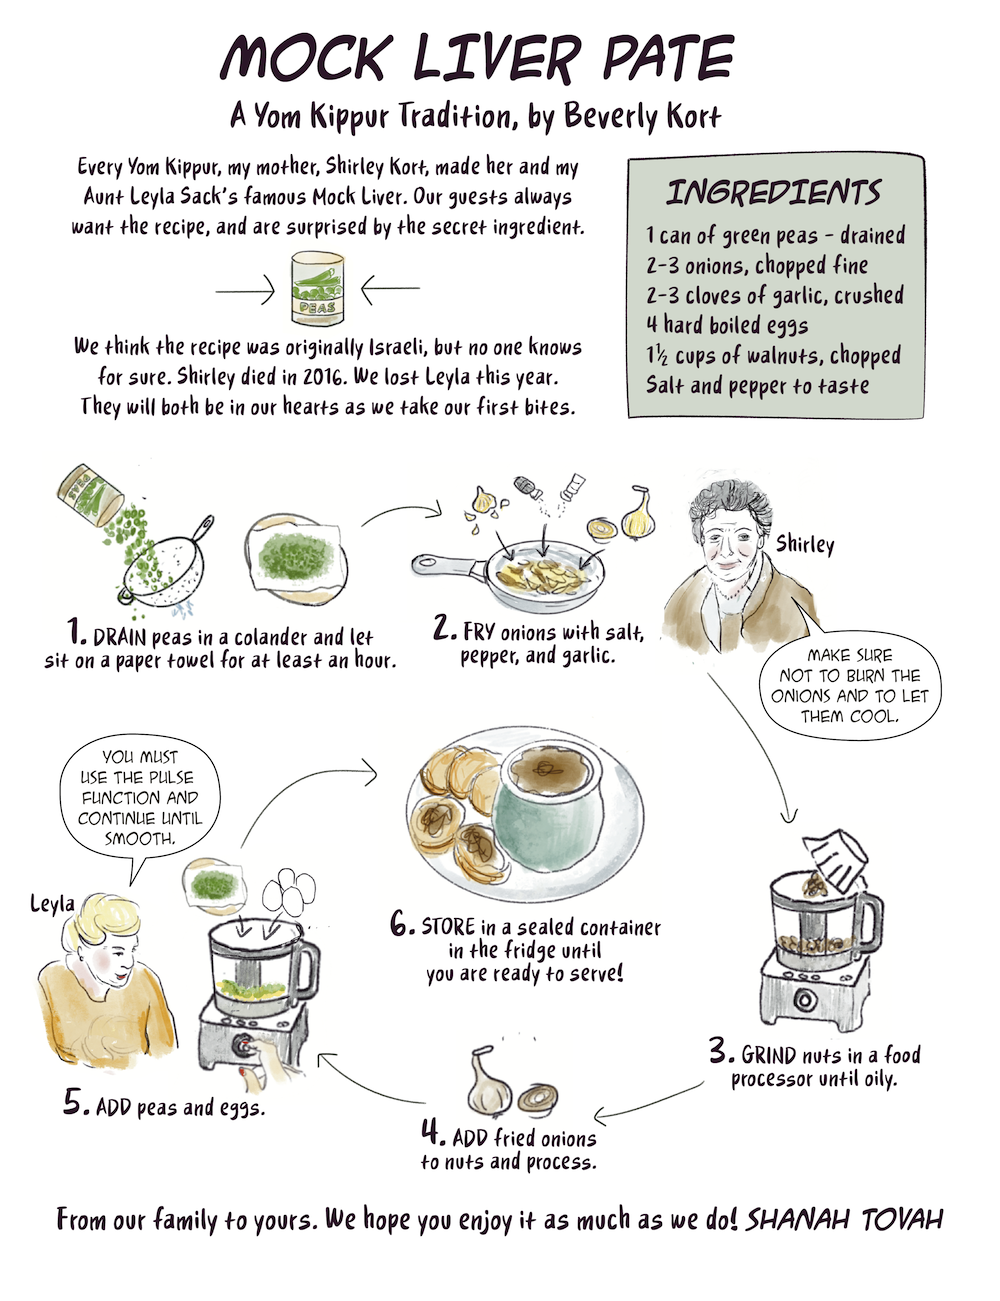 image - illustrated Mock Liver Pate recipe